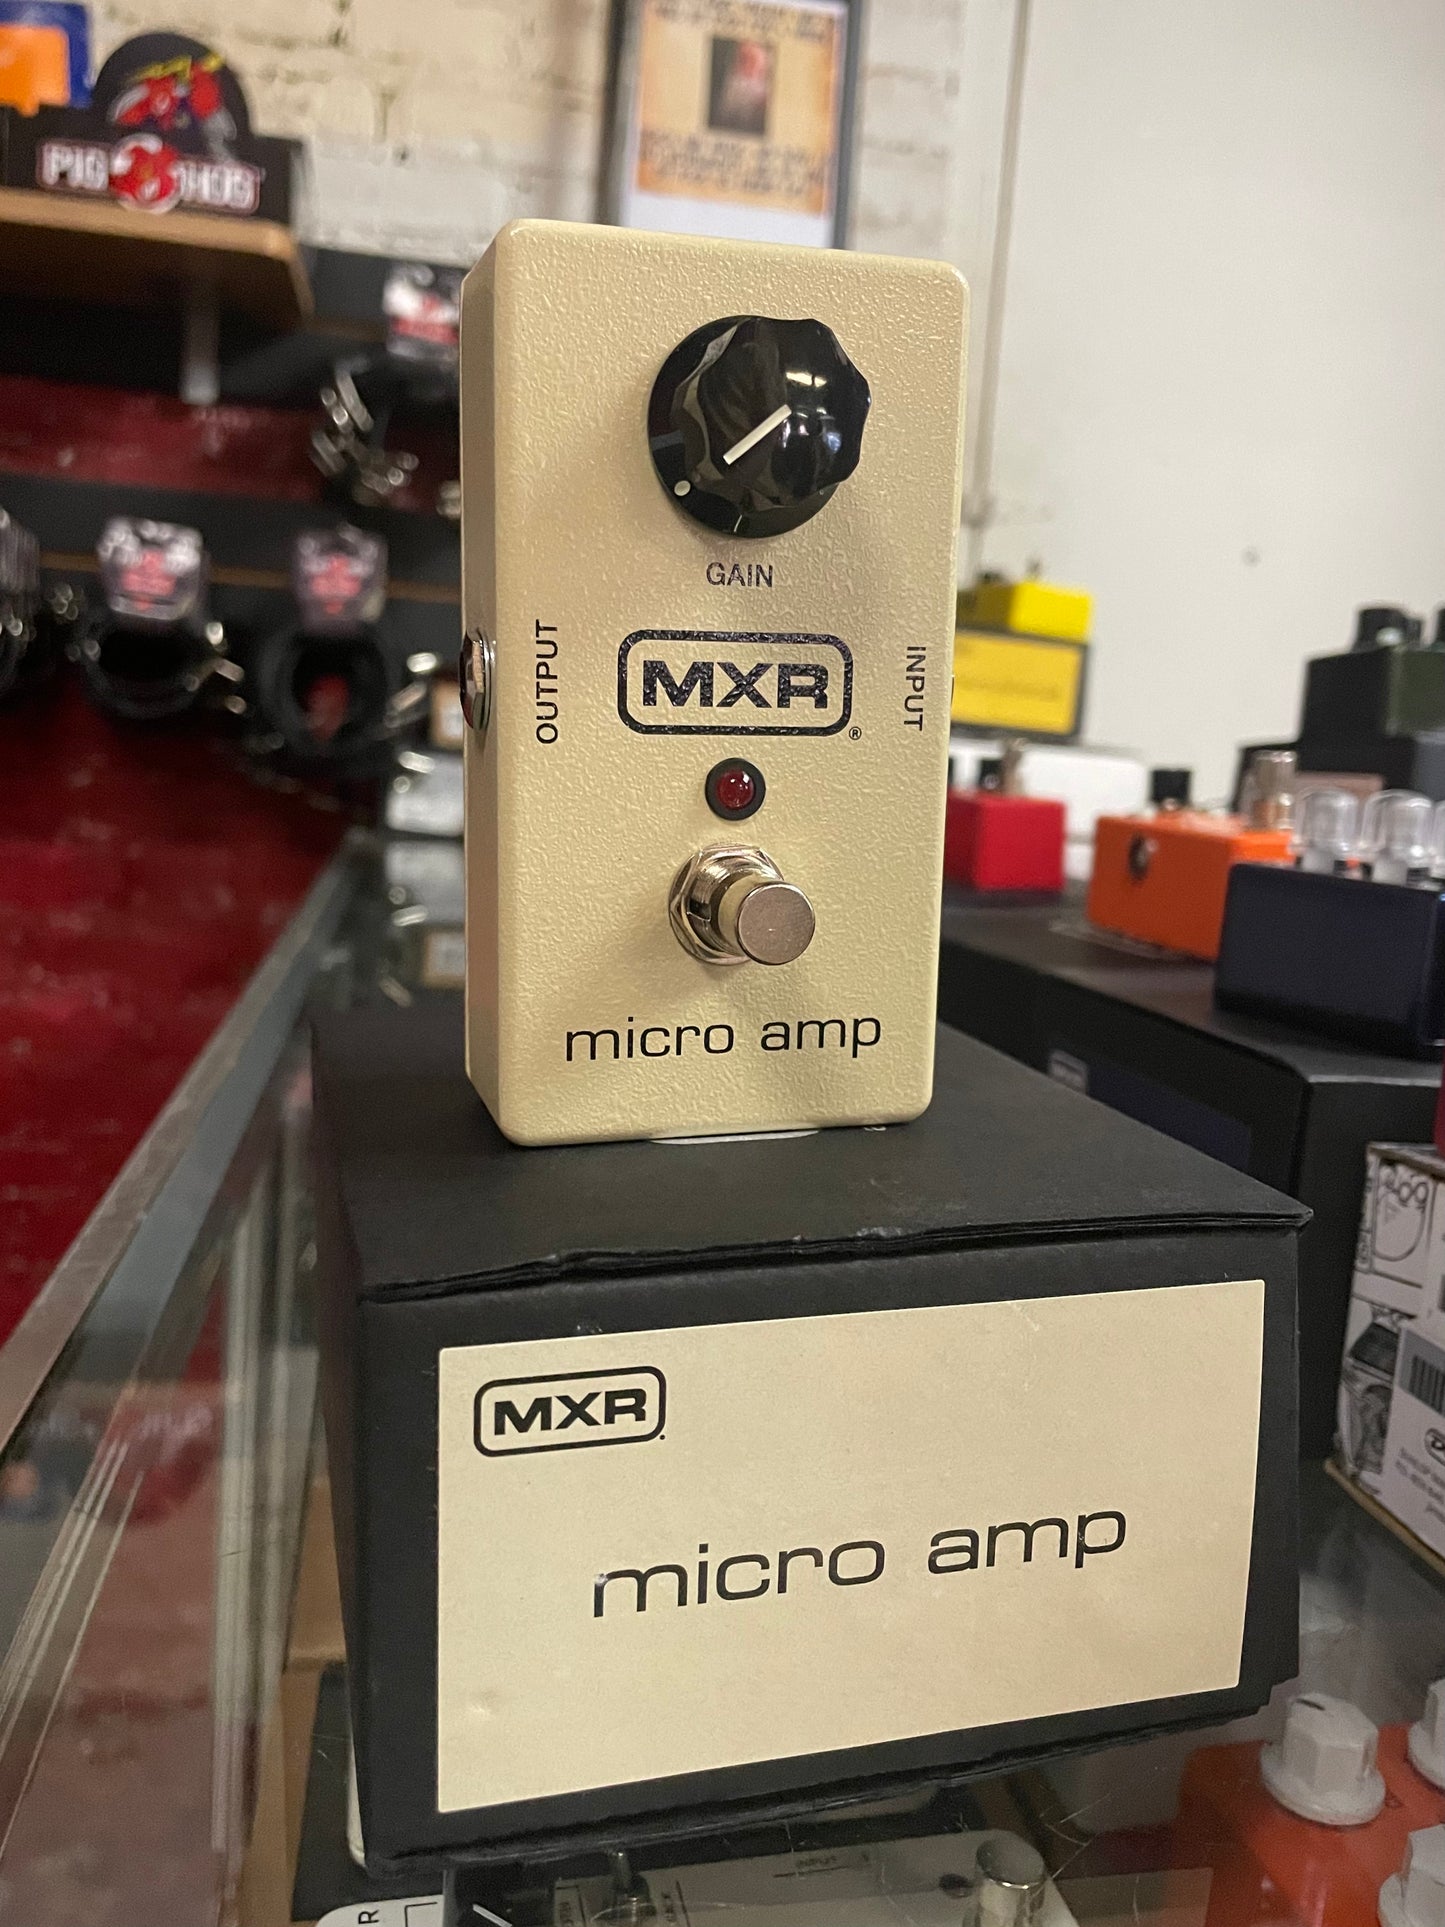 MXR M133 Micro Amp Gain / Boost Pedal (NEW)